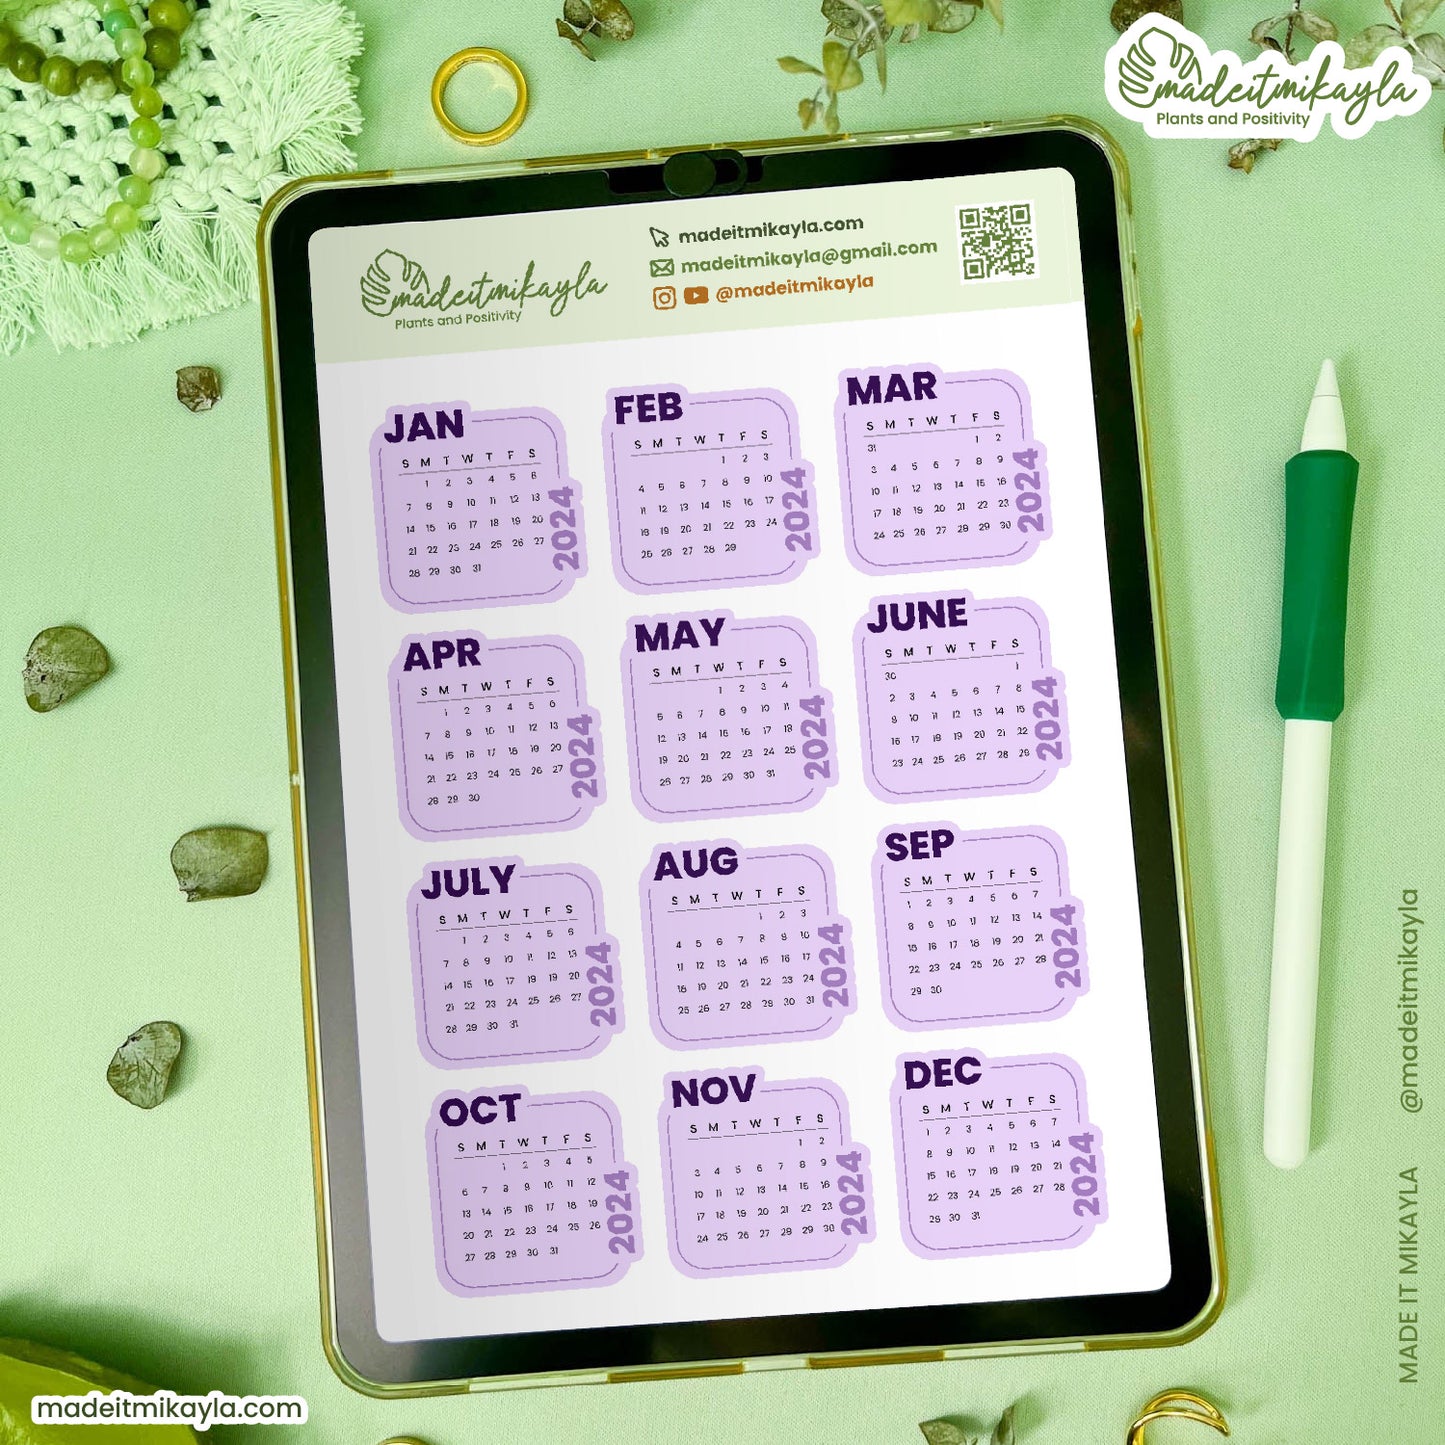 Purple 2024 Calendars Digital Stickers | MadeItMikayla